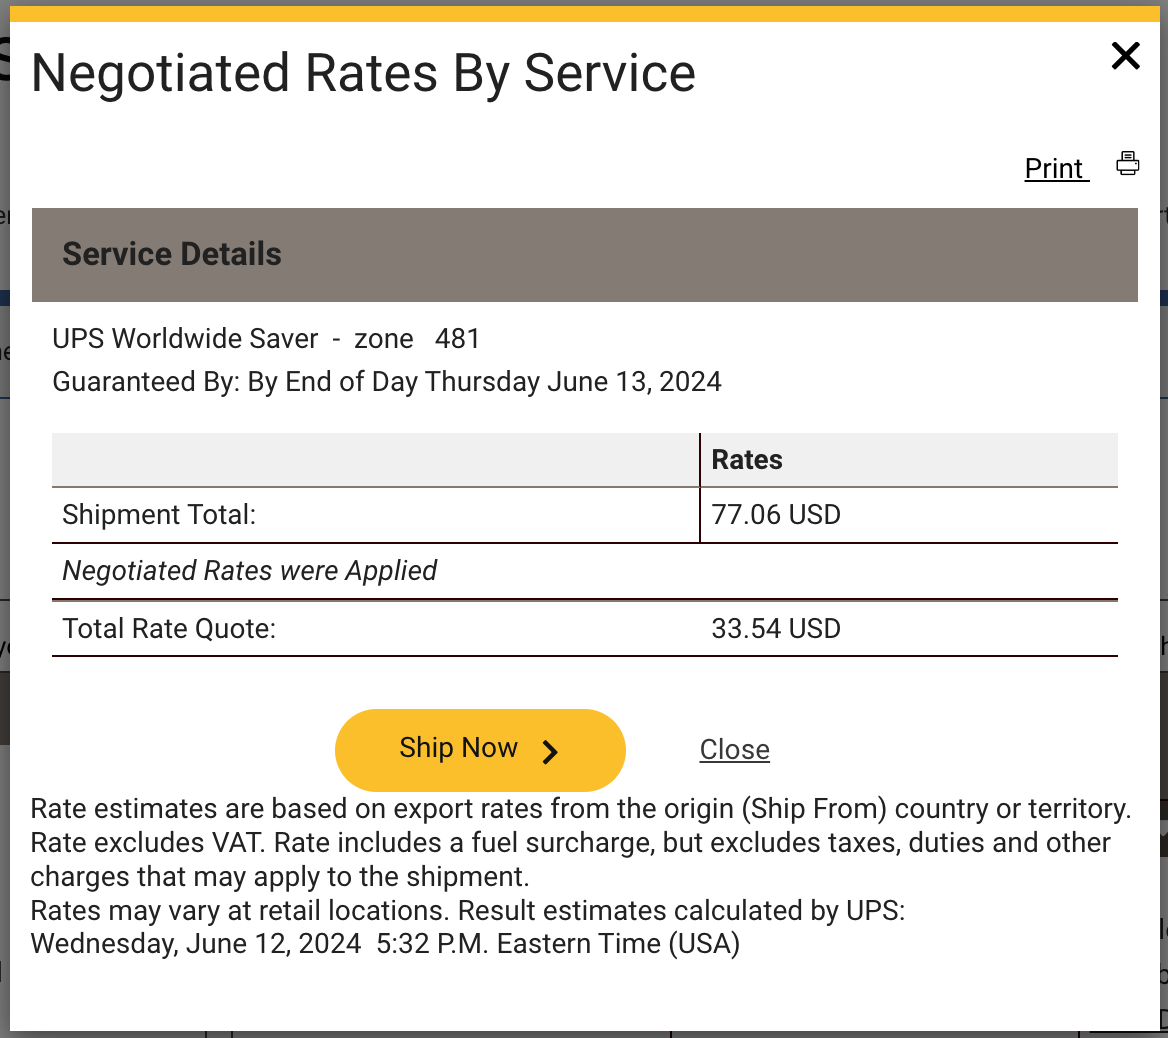 UPS negotiated
rates